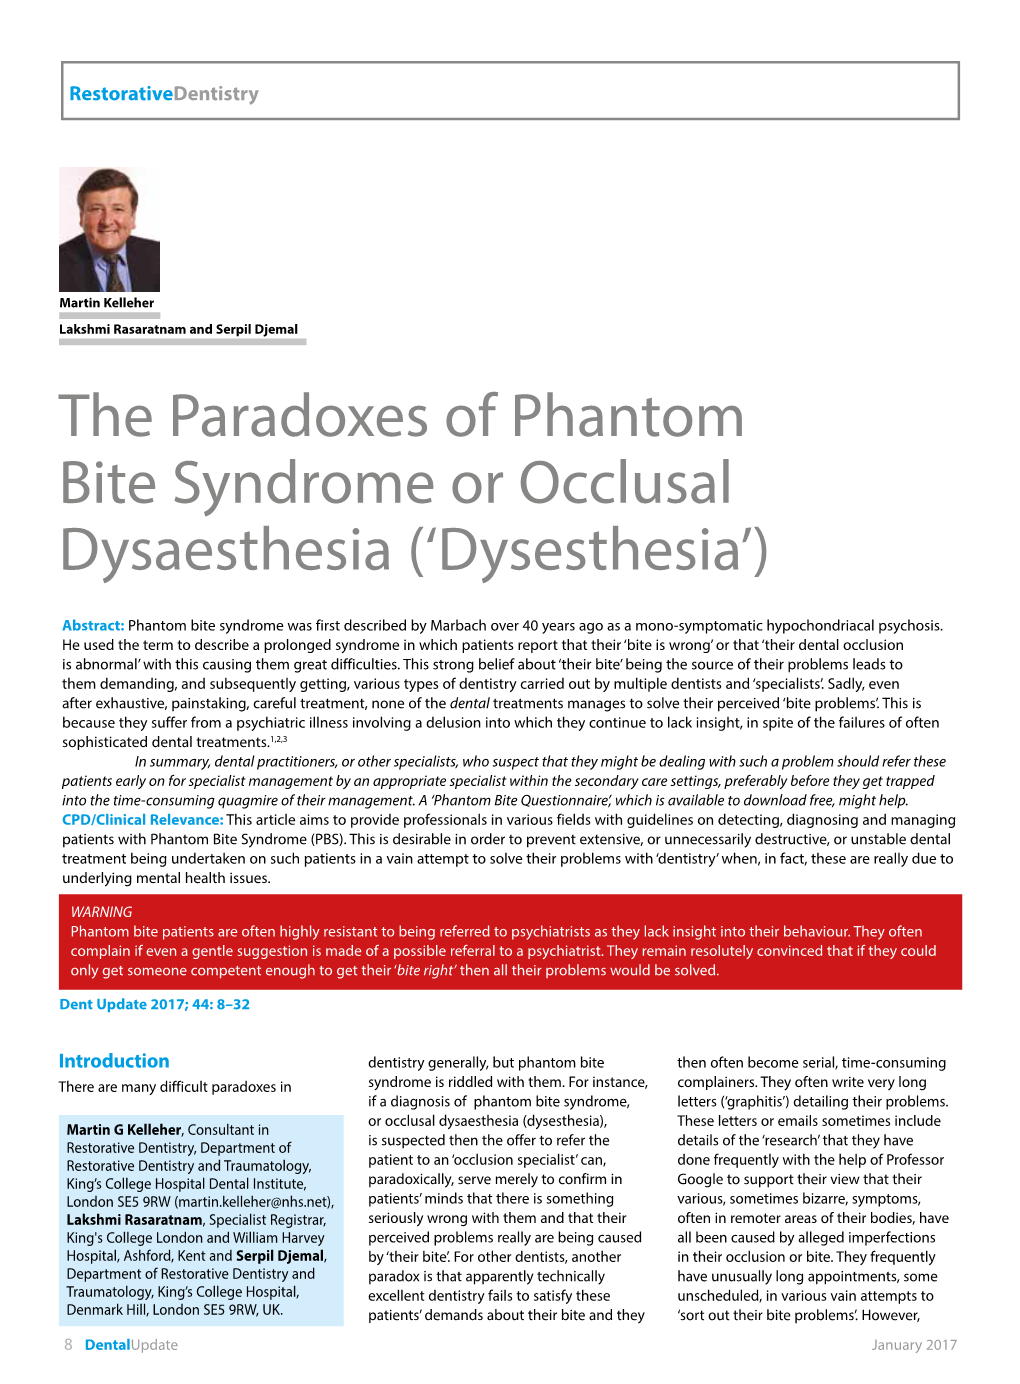 The Paradoxes of Phantom Bite Syndrome Or Occlusal Dysaesthesia (‘Dysesthesia’)